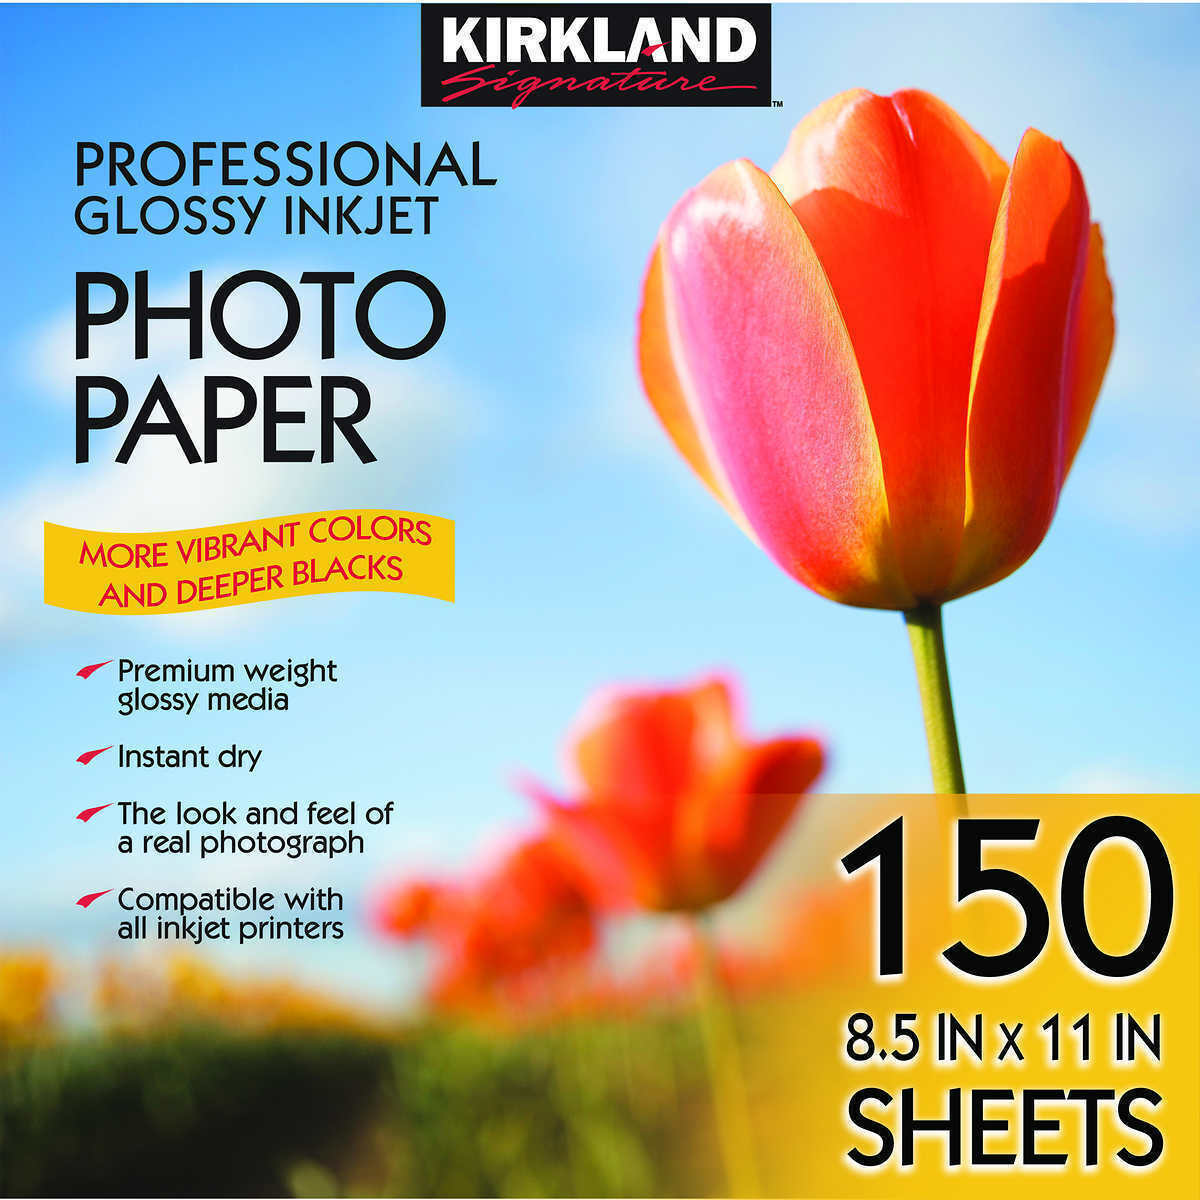 Kirkland Professional Glossy Photo Paper - 8.5 x 11 (150 Sheets) FAST SHIPPING